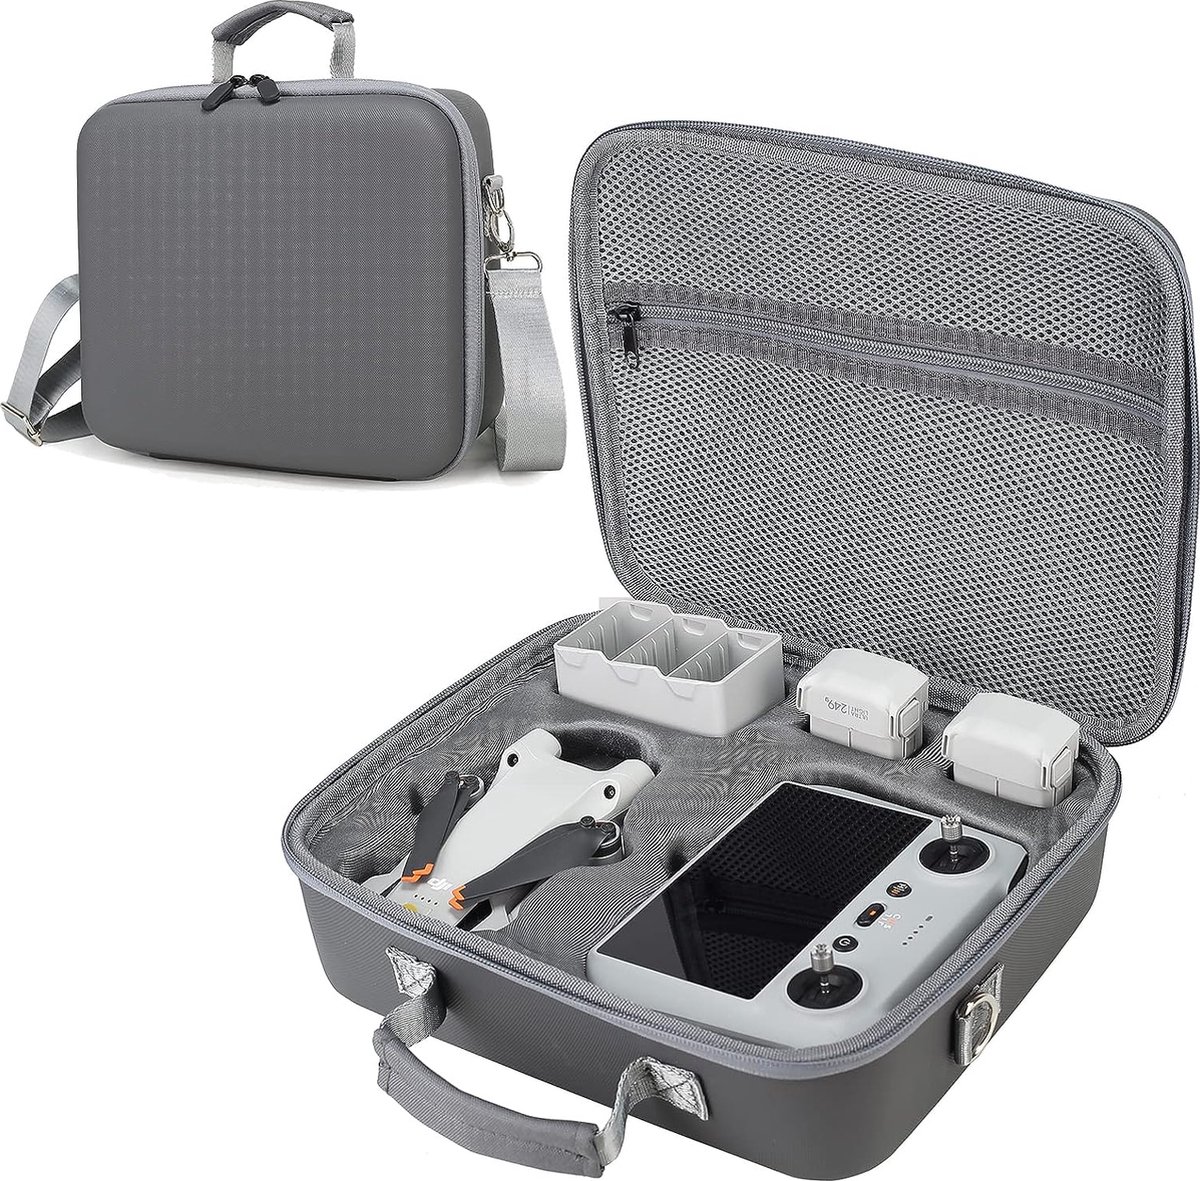 Mini 3 Pro tas, draagbare draagtas voor DJI Mini 3 Pro drones - hoge capaciteit case voor DJI Mini 3 Pro en accessoires compatibel met DJI RC/DJI RC-N1 afstandsbediening, mini 3 pro tas